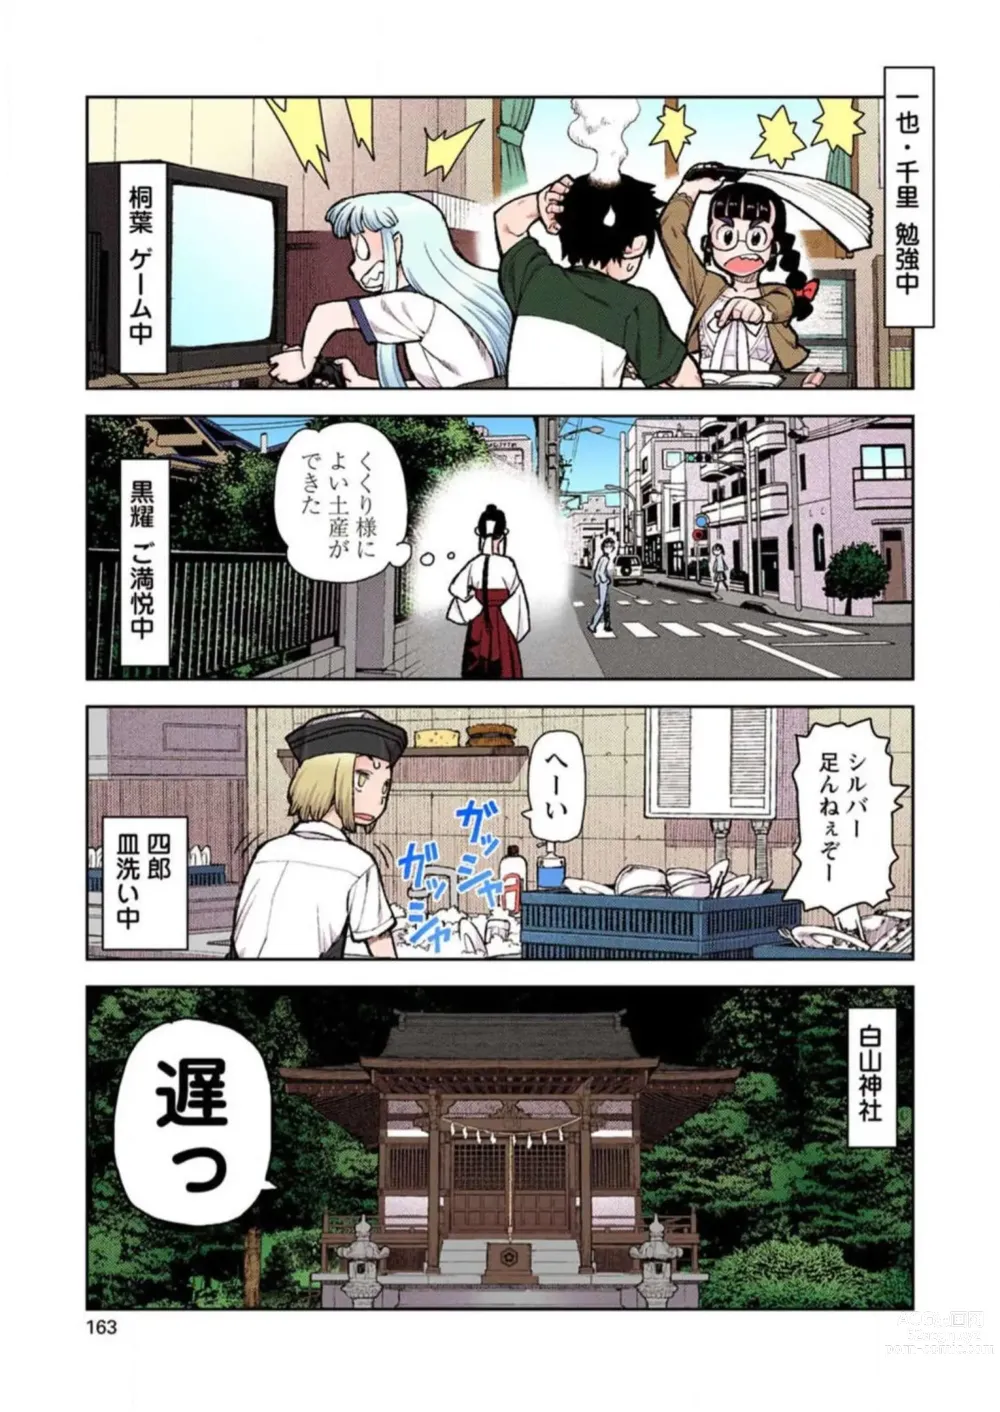 Page 165 of manga Tsugumomo Digital Colored Comics V1